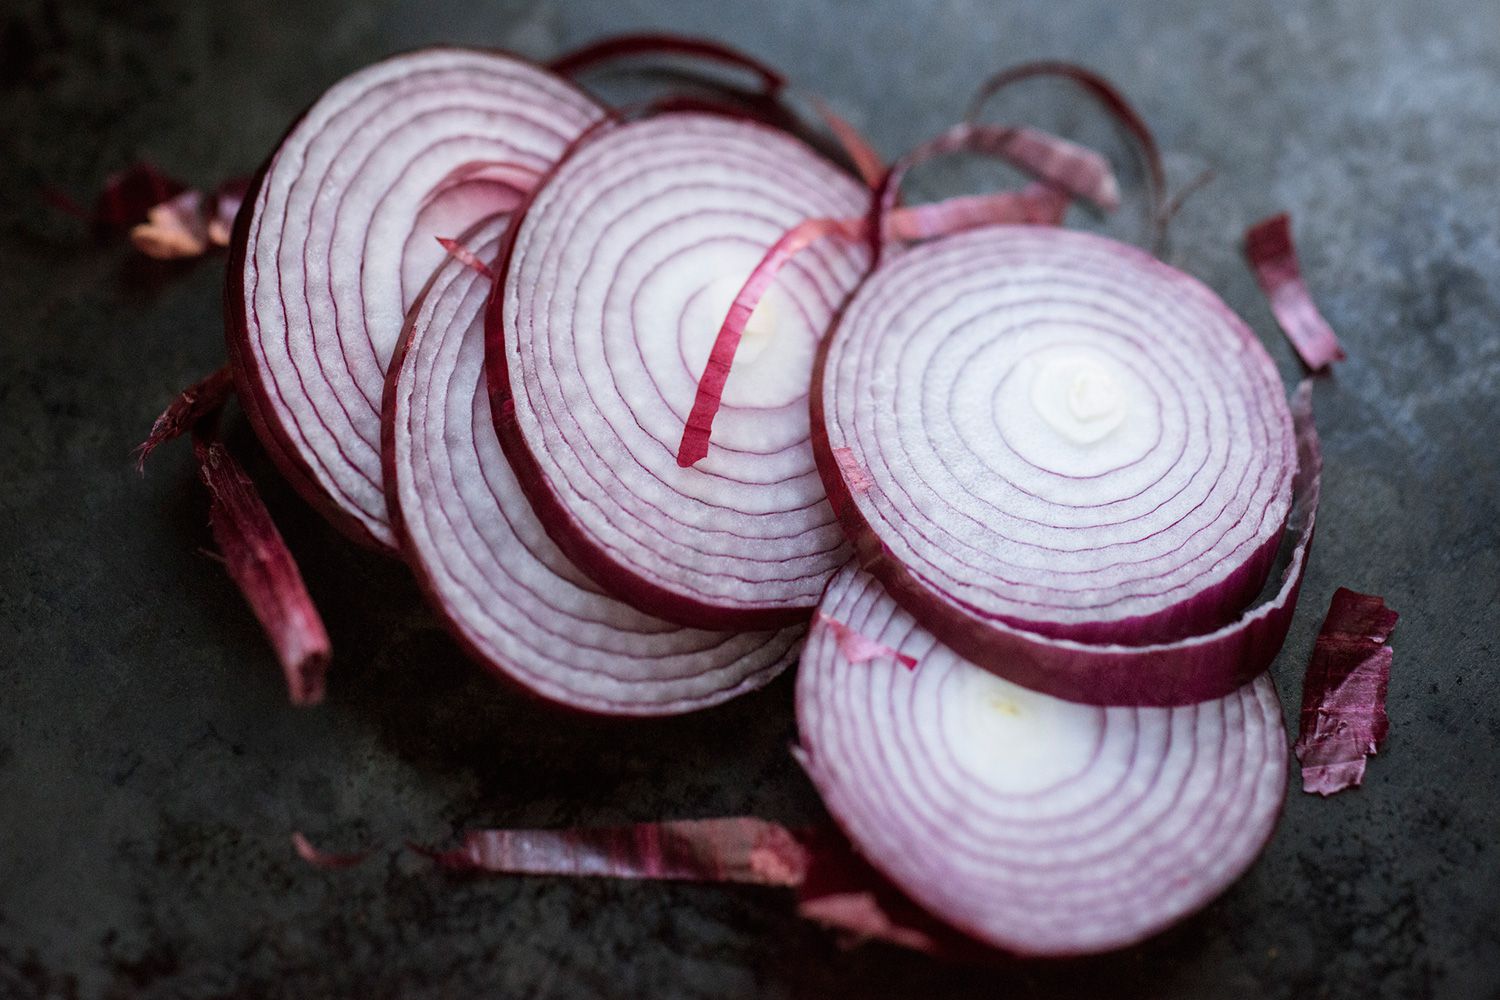 Putting onions